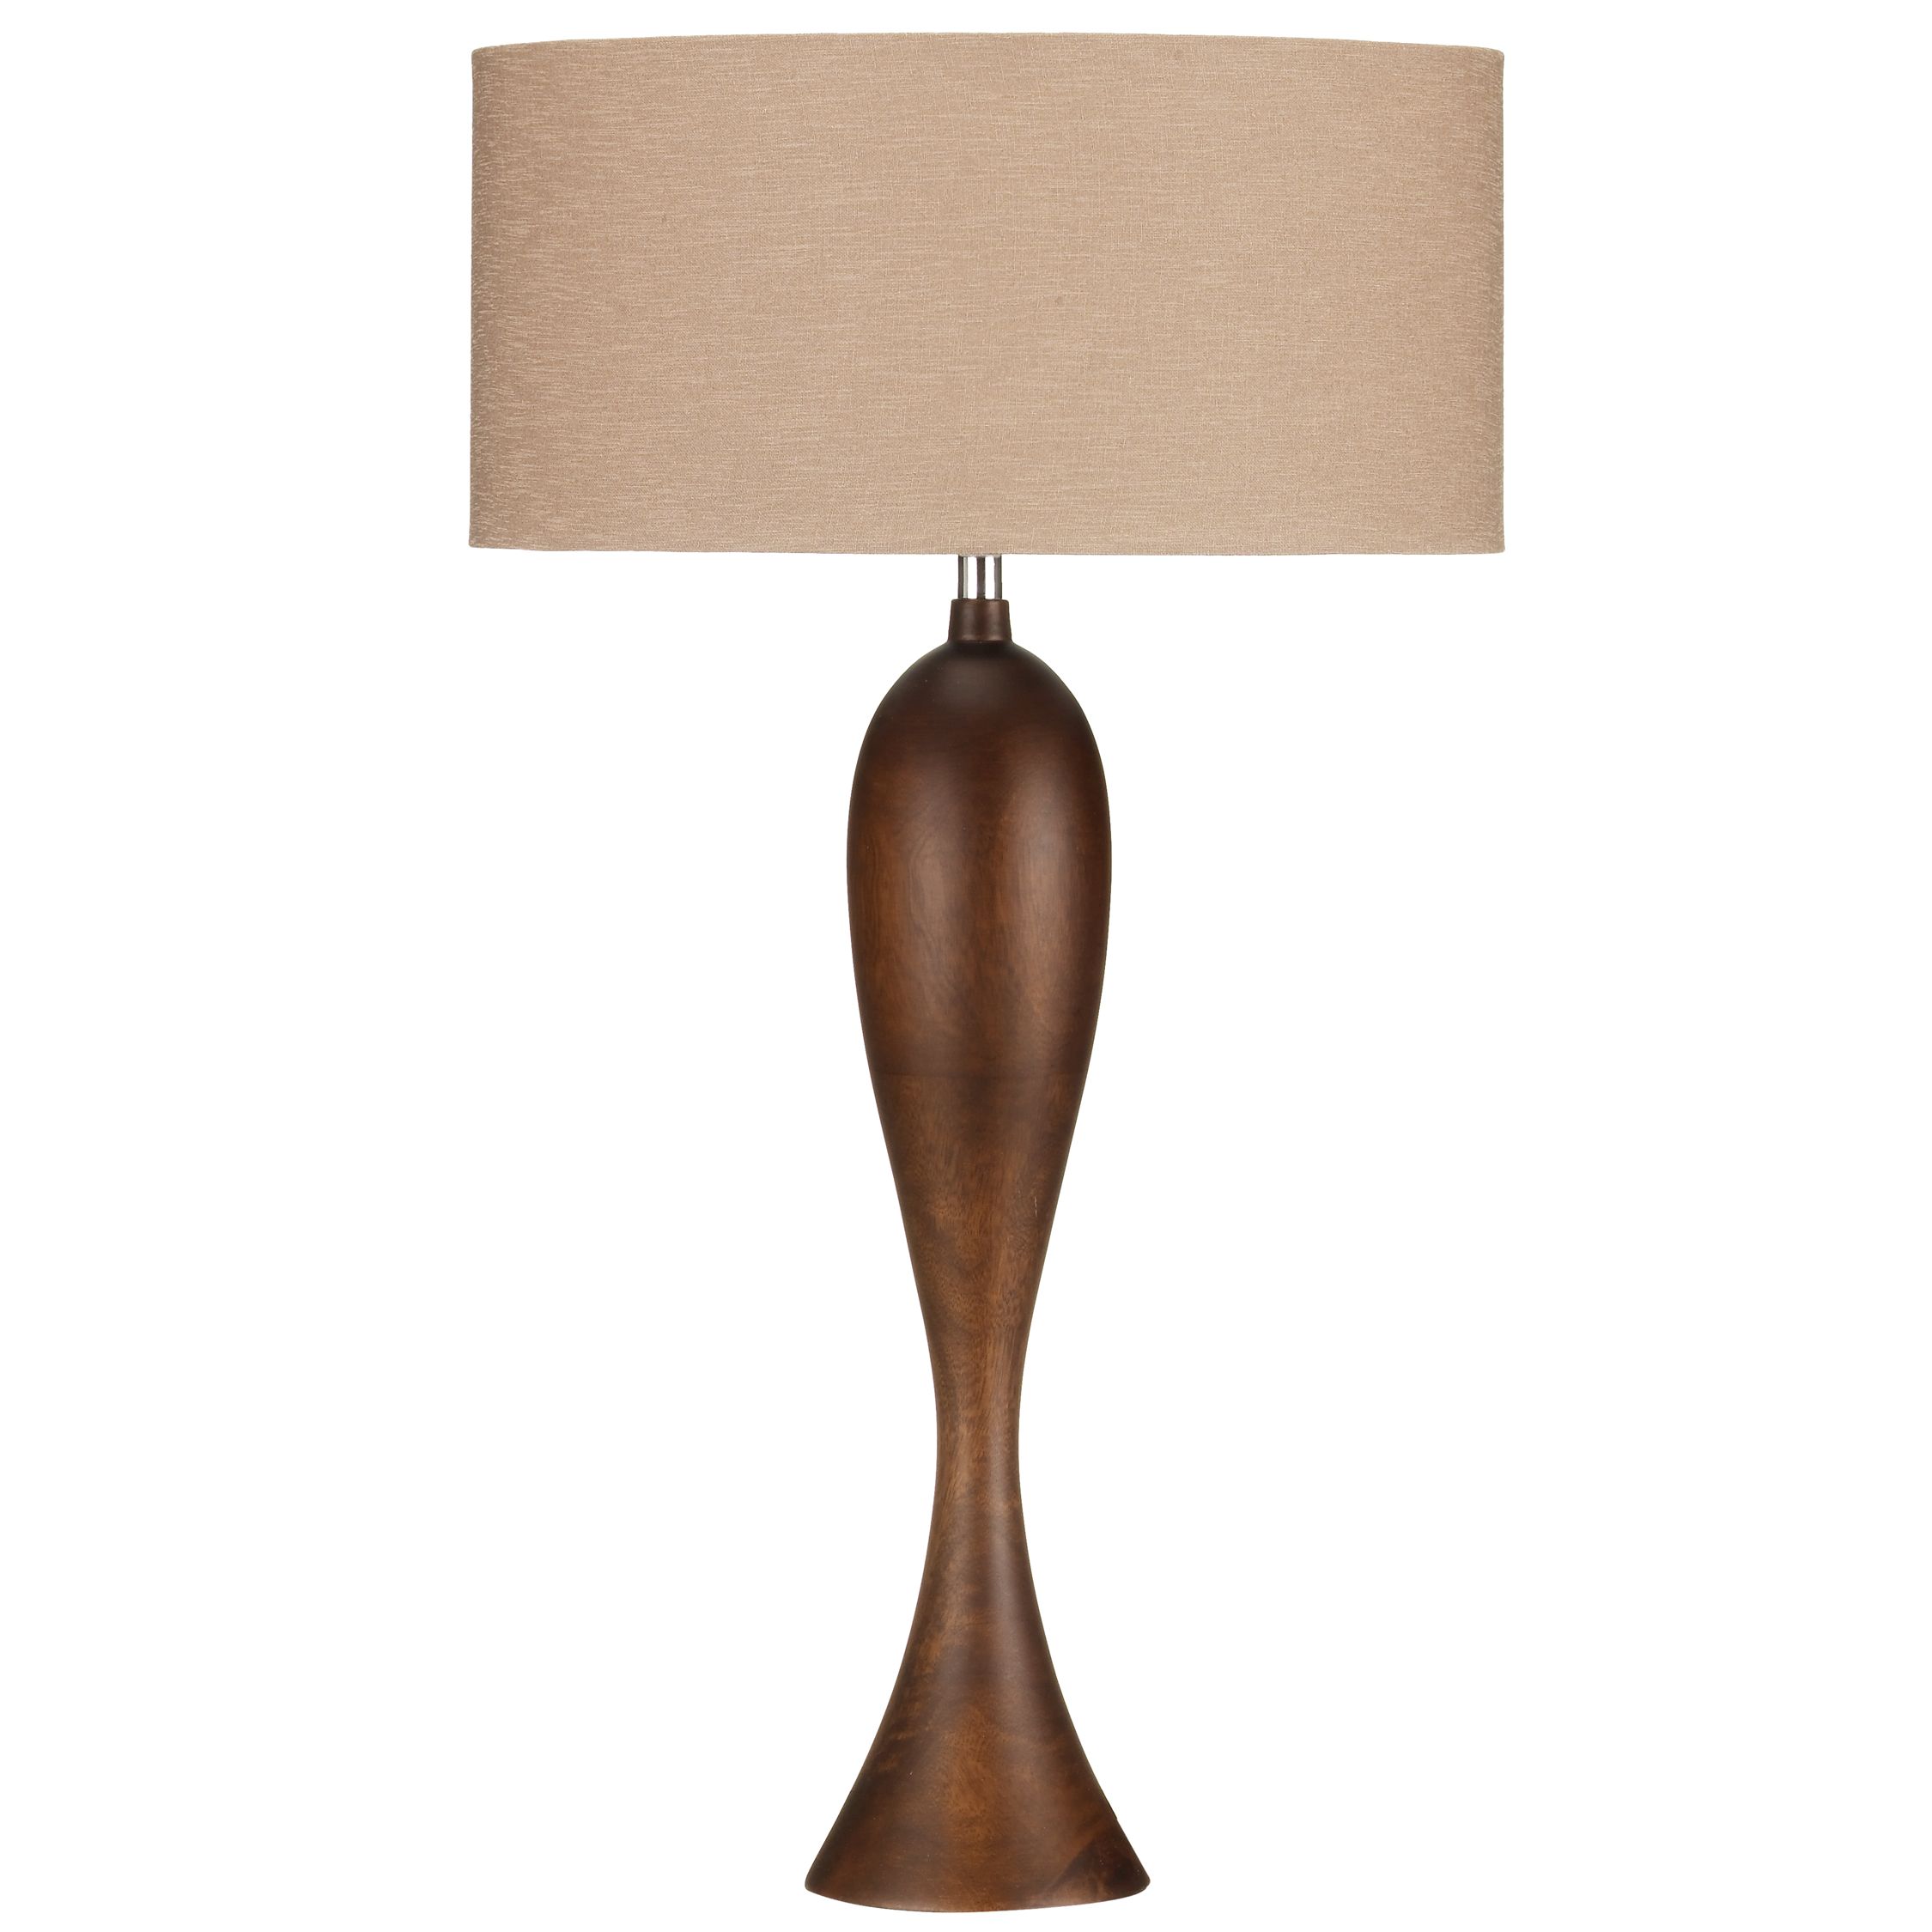 John Lewis Joanna Wood Table Lamp